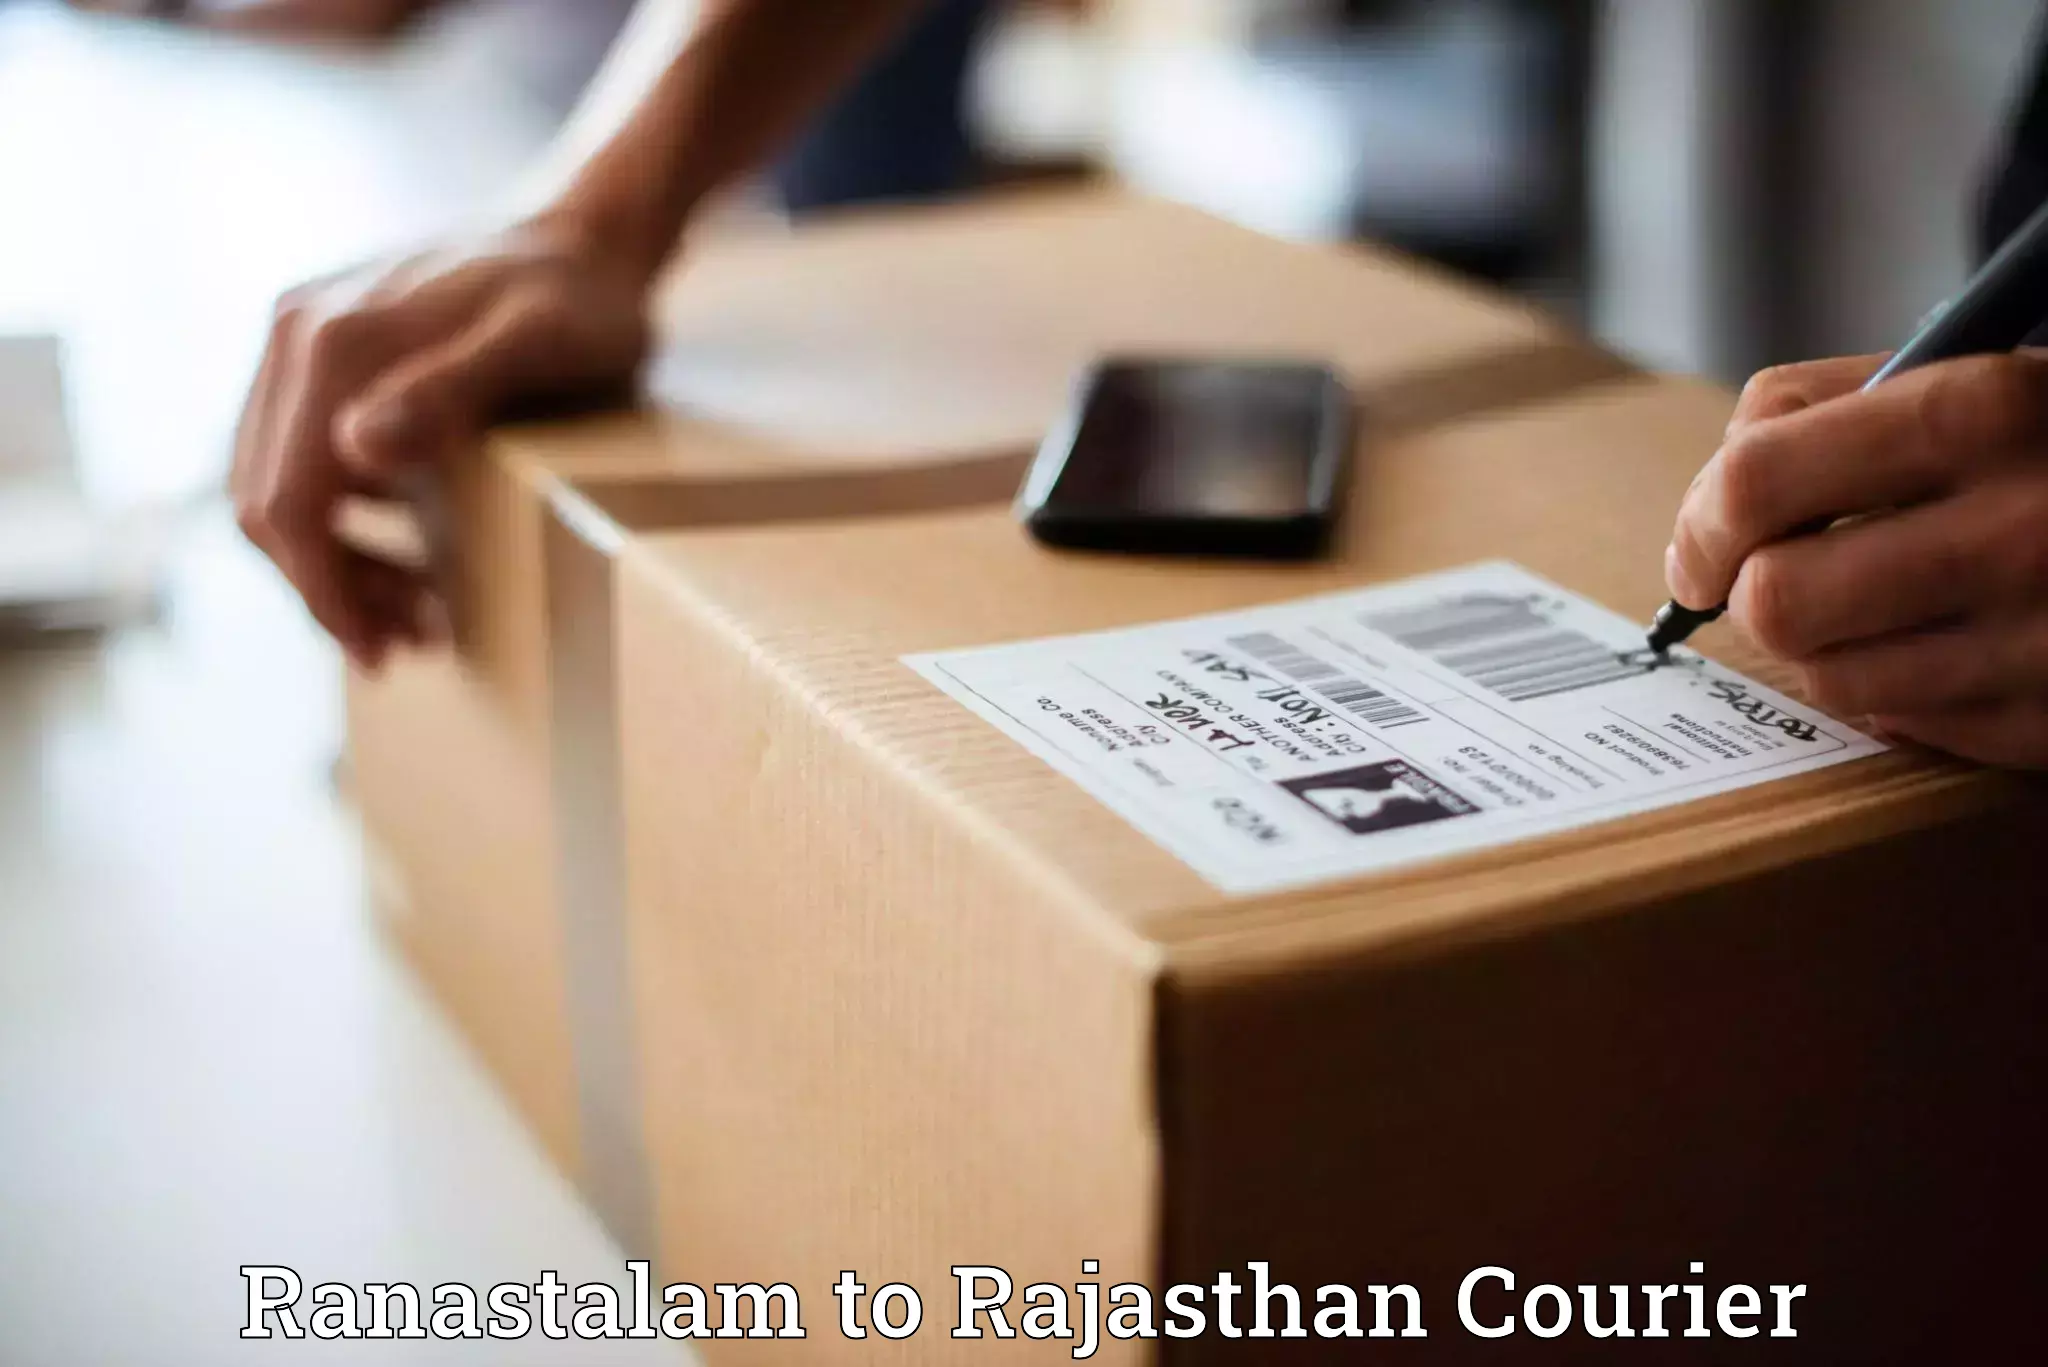 Courier service innovation Ranastalam to Sambhar